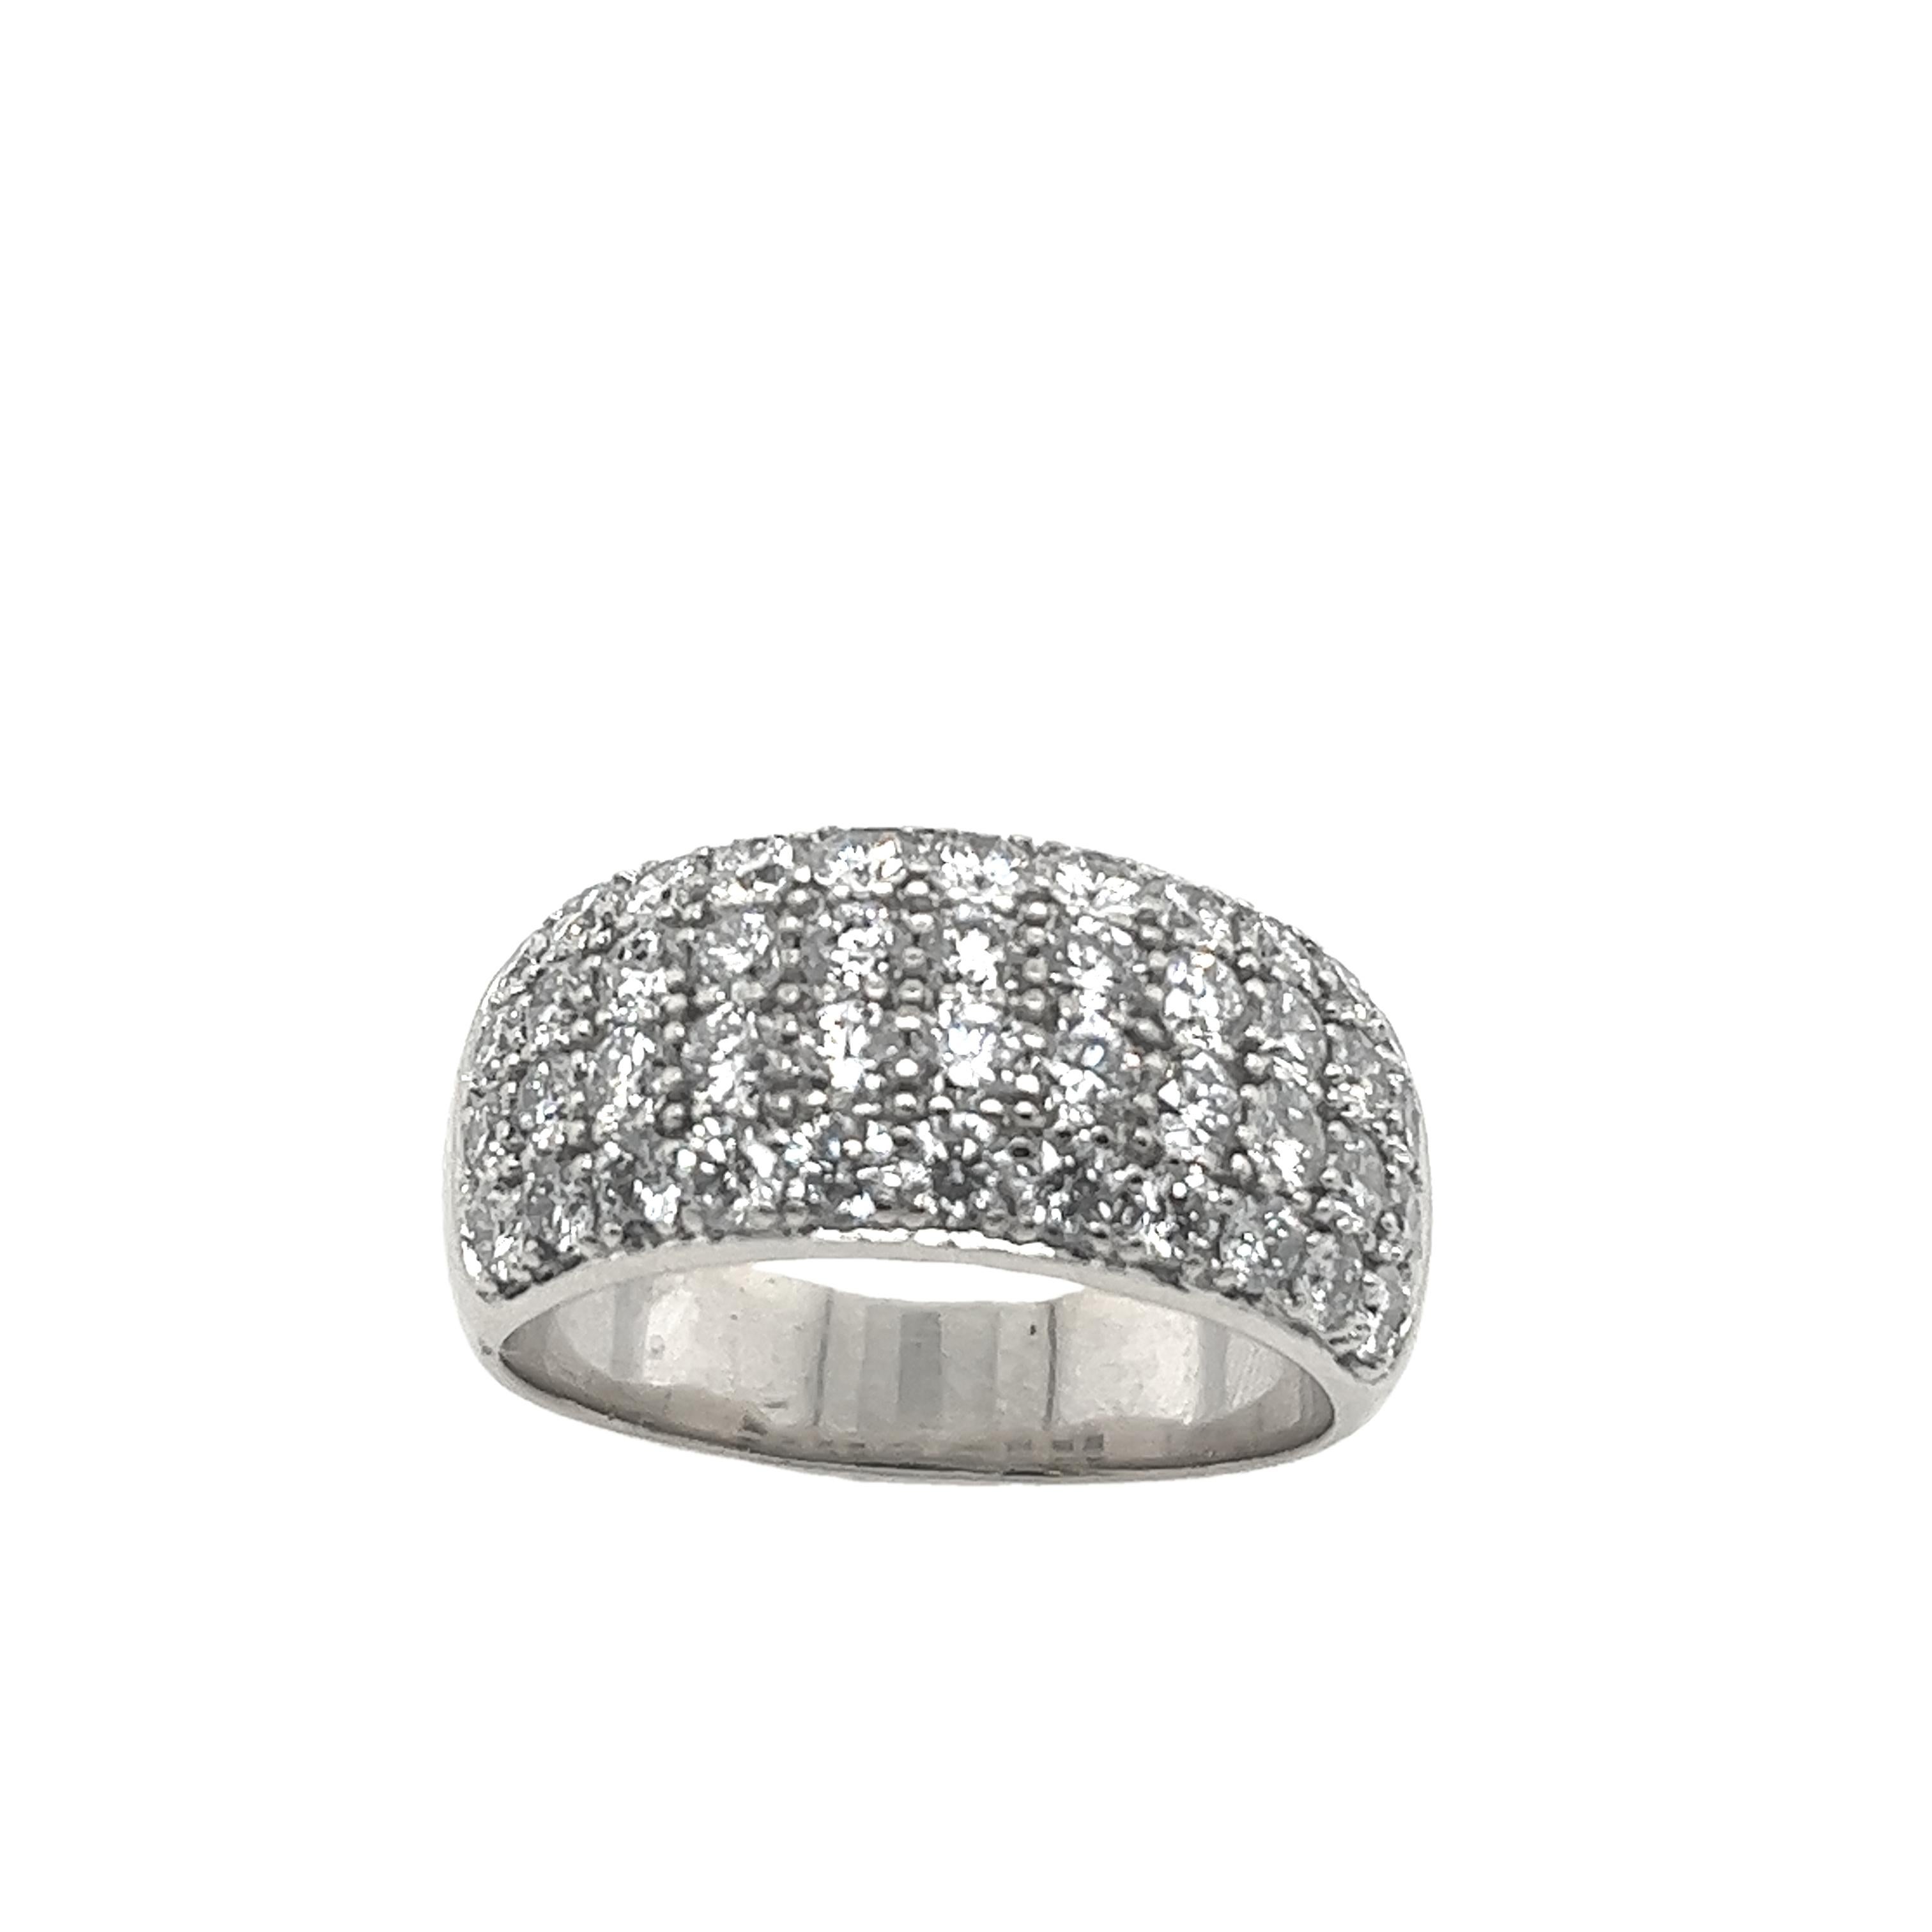 Women's or Men's 18ct White Gold 4-Row Diamond Dress Ring Set With 2.55 carats Natural Diamonds